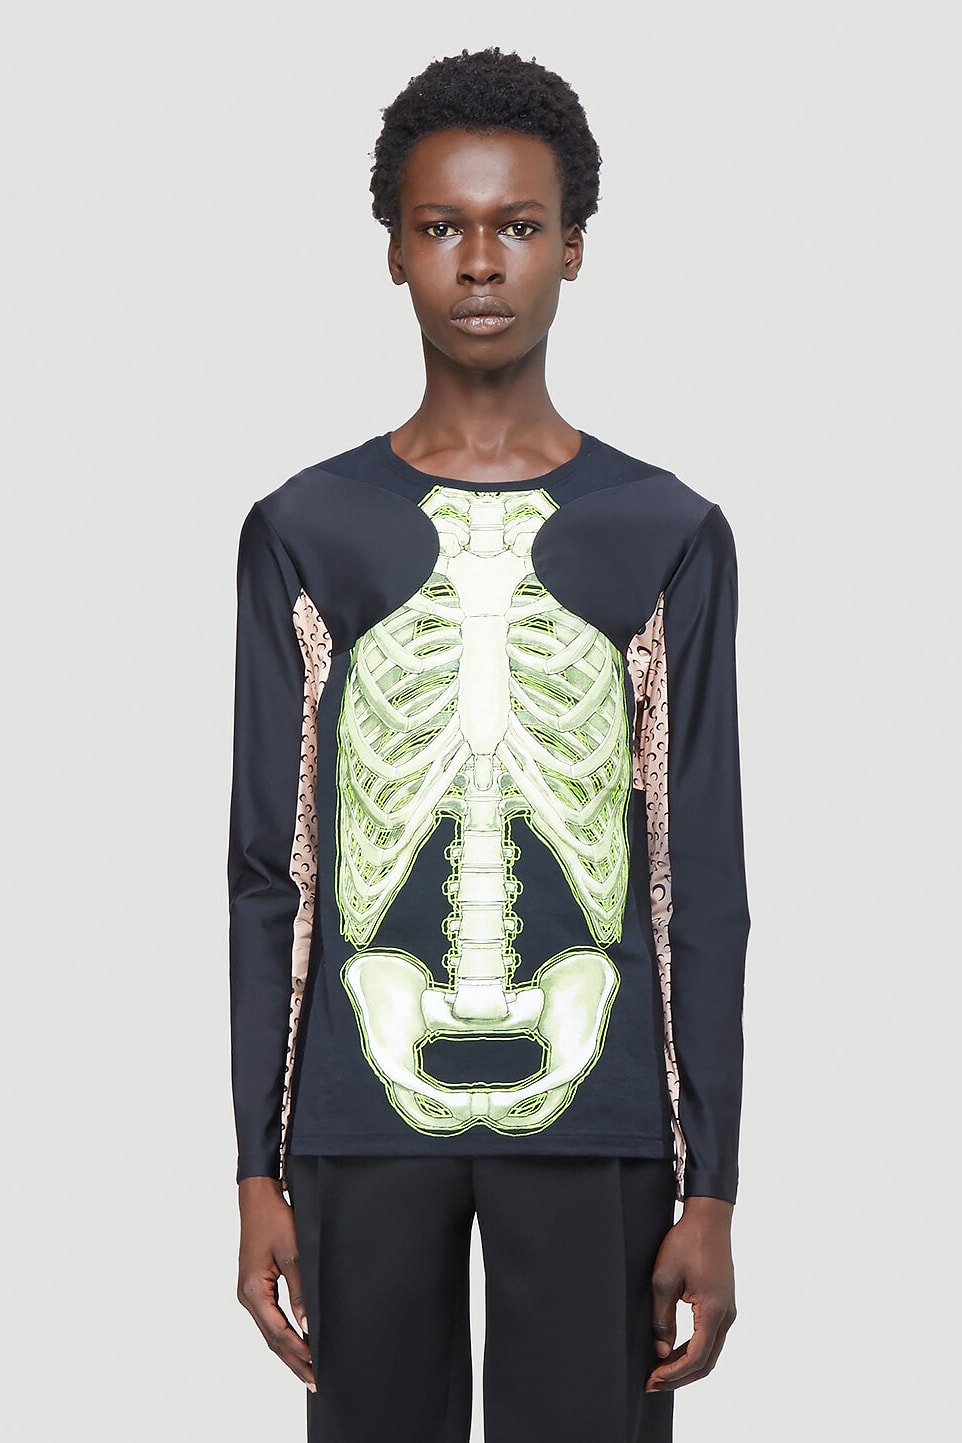 Marine Serre Skeleton Long-Sleeve T-Shirt Black Half Moon Print Tight Top Unisex LN-CC Halloween Fall Winter 2020 FW20 Neon Green Graphic Spooky